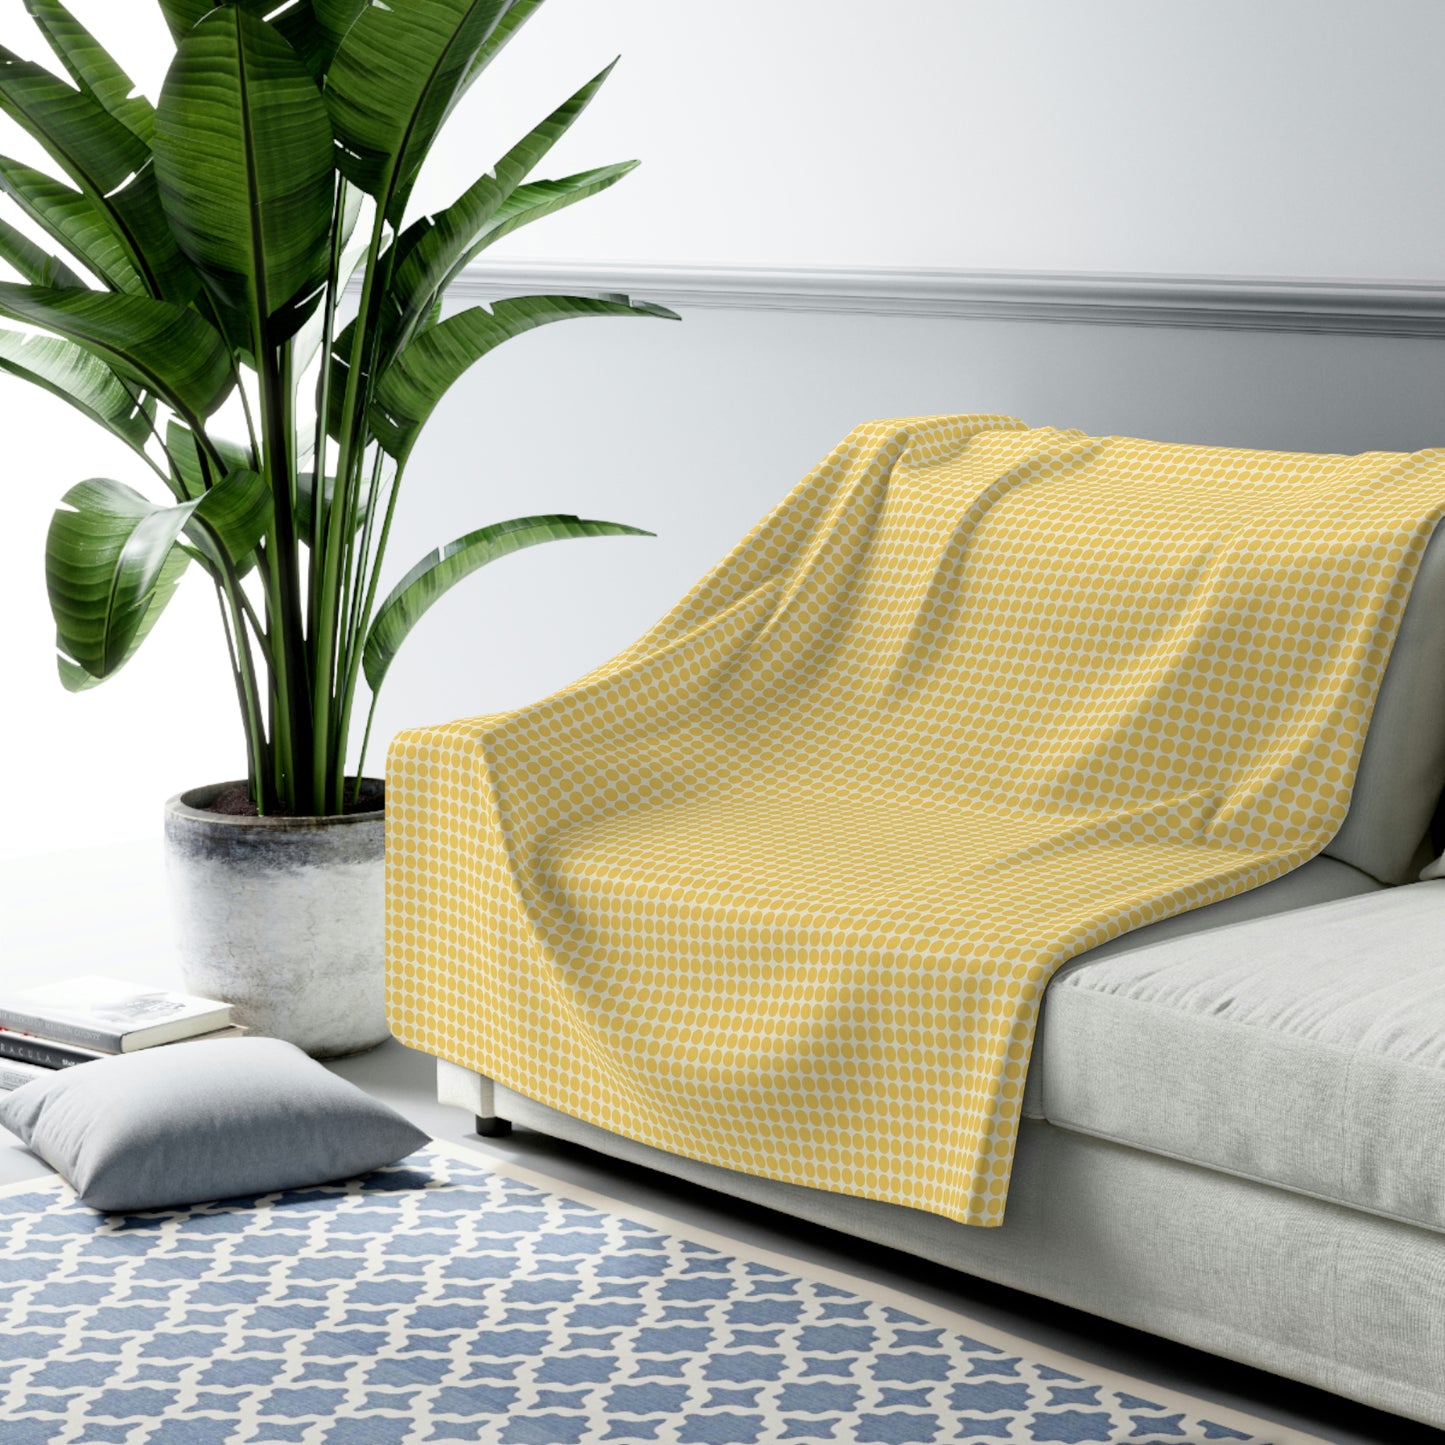 yellow polkadot pattern sherpa blanket, yellow sherpa blanket with polkadot design, retro yellow sherpa blanket